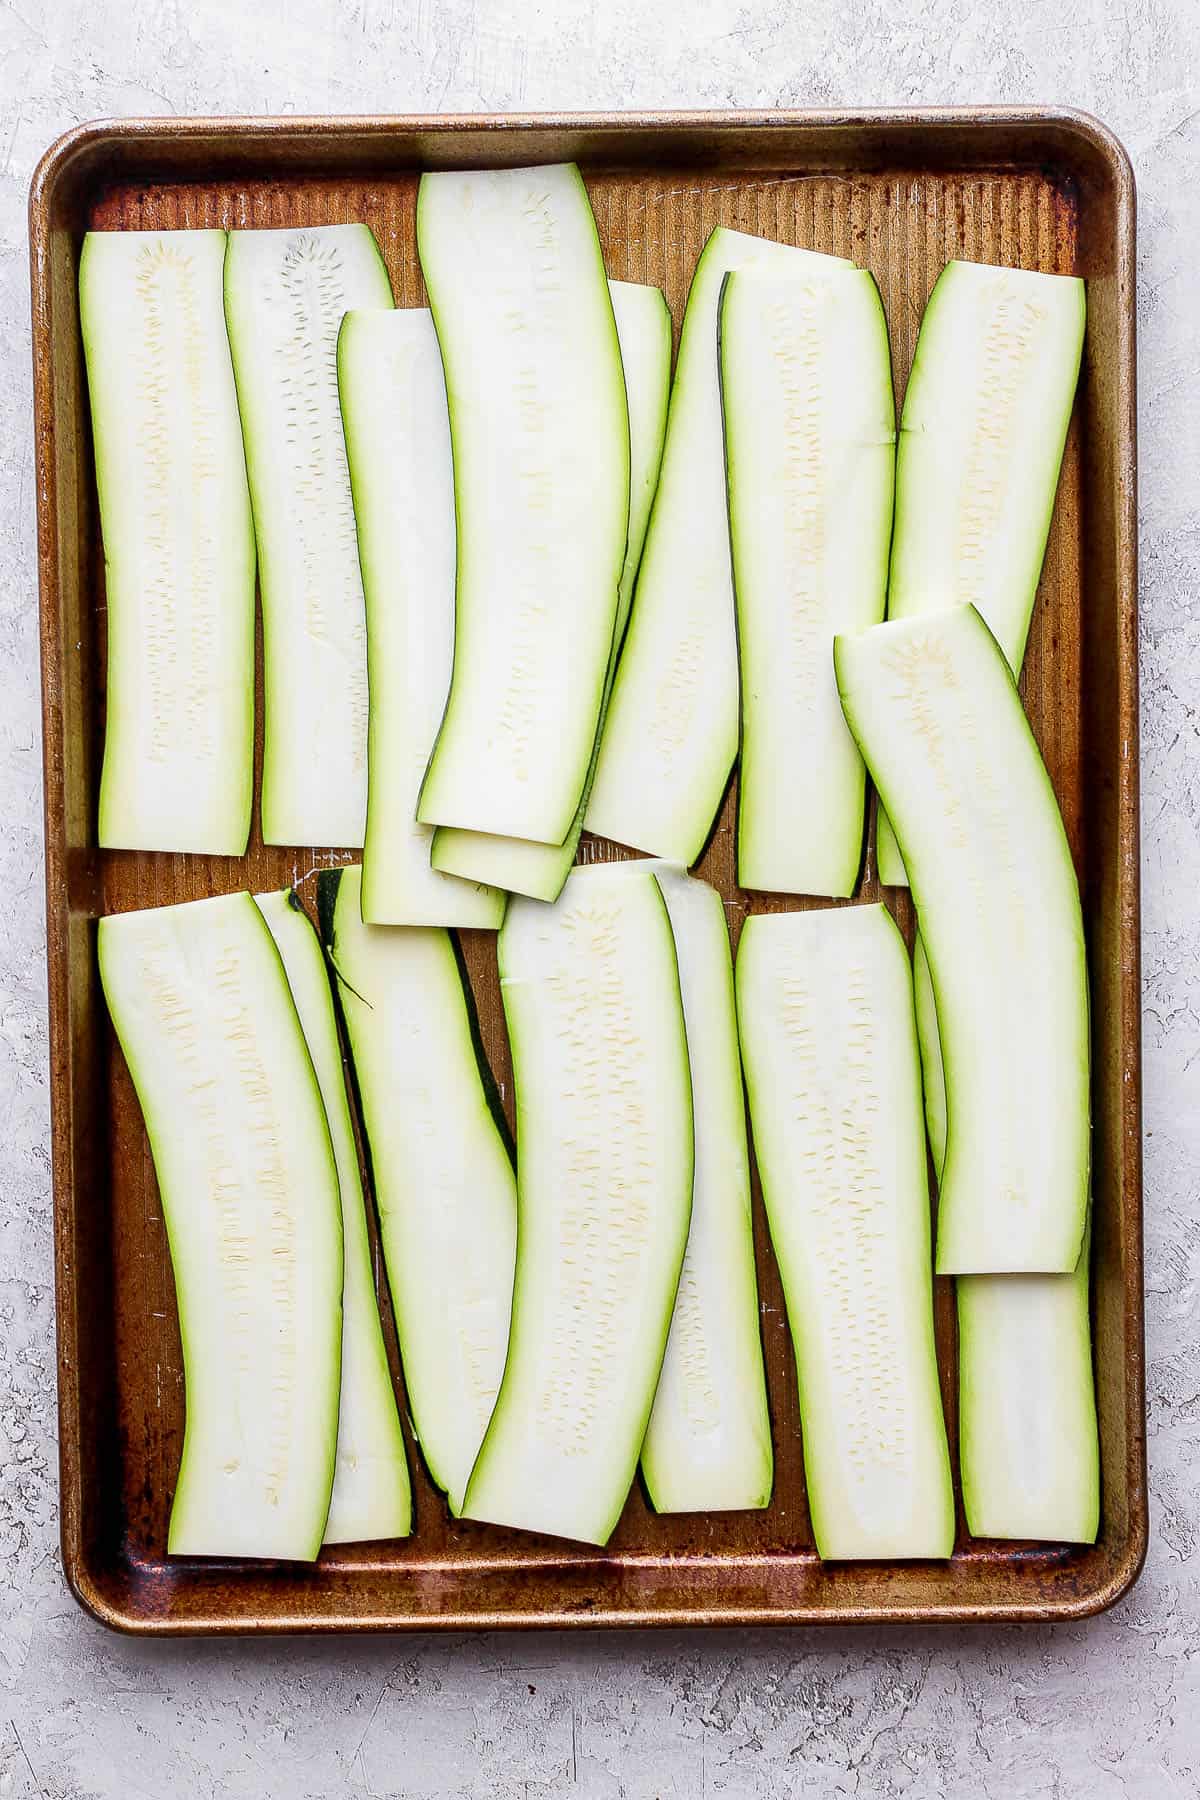 Zucchini planks on a baking sheet.